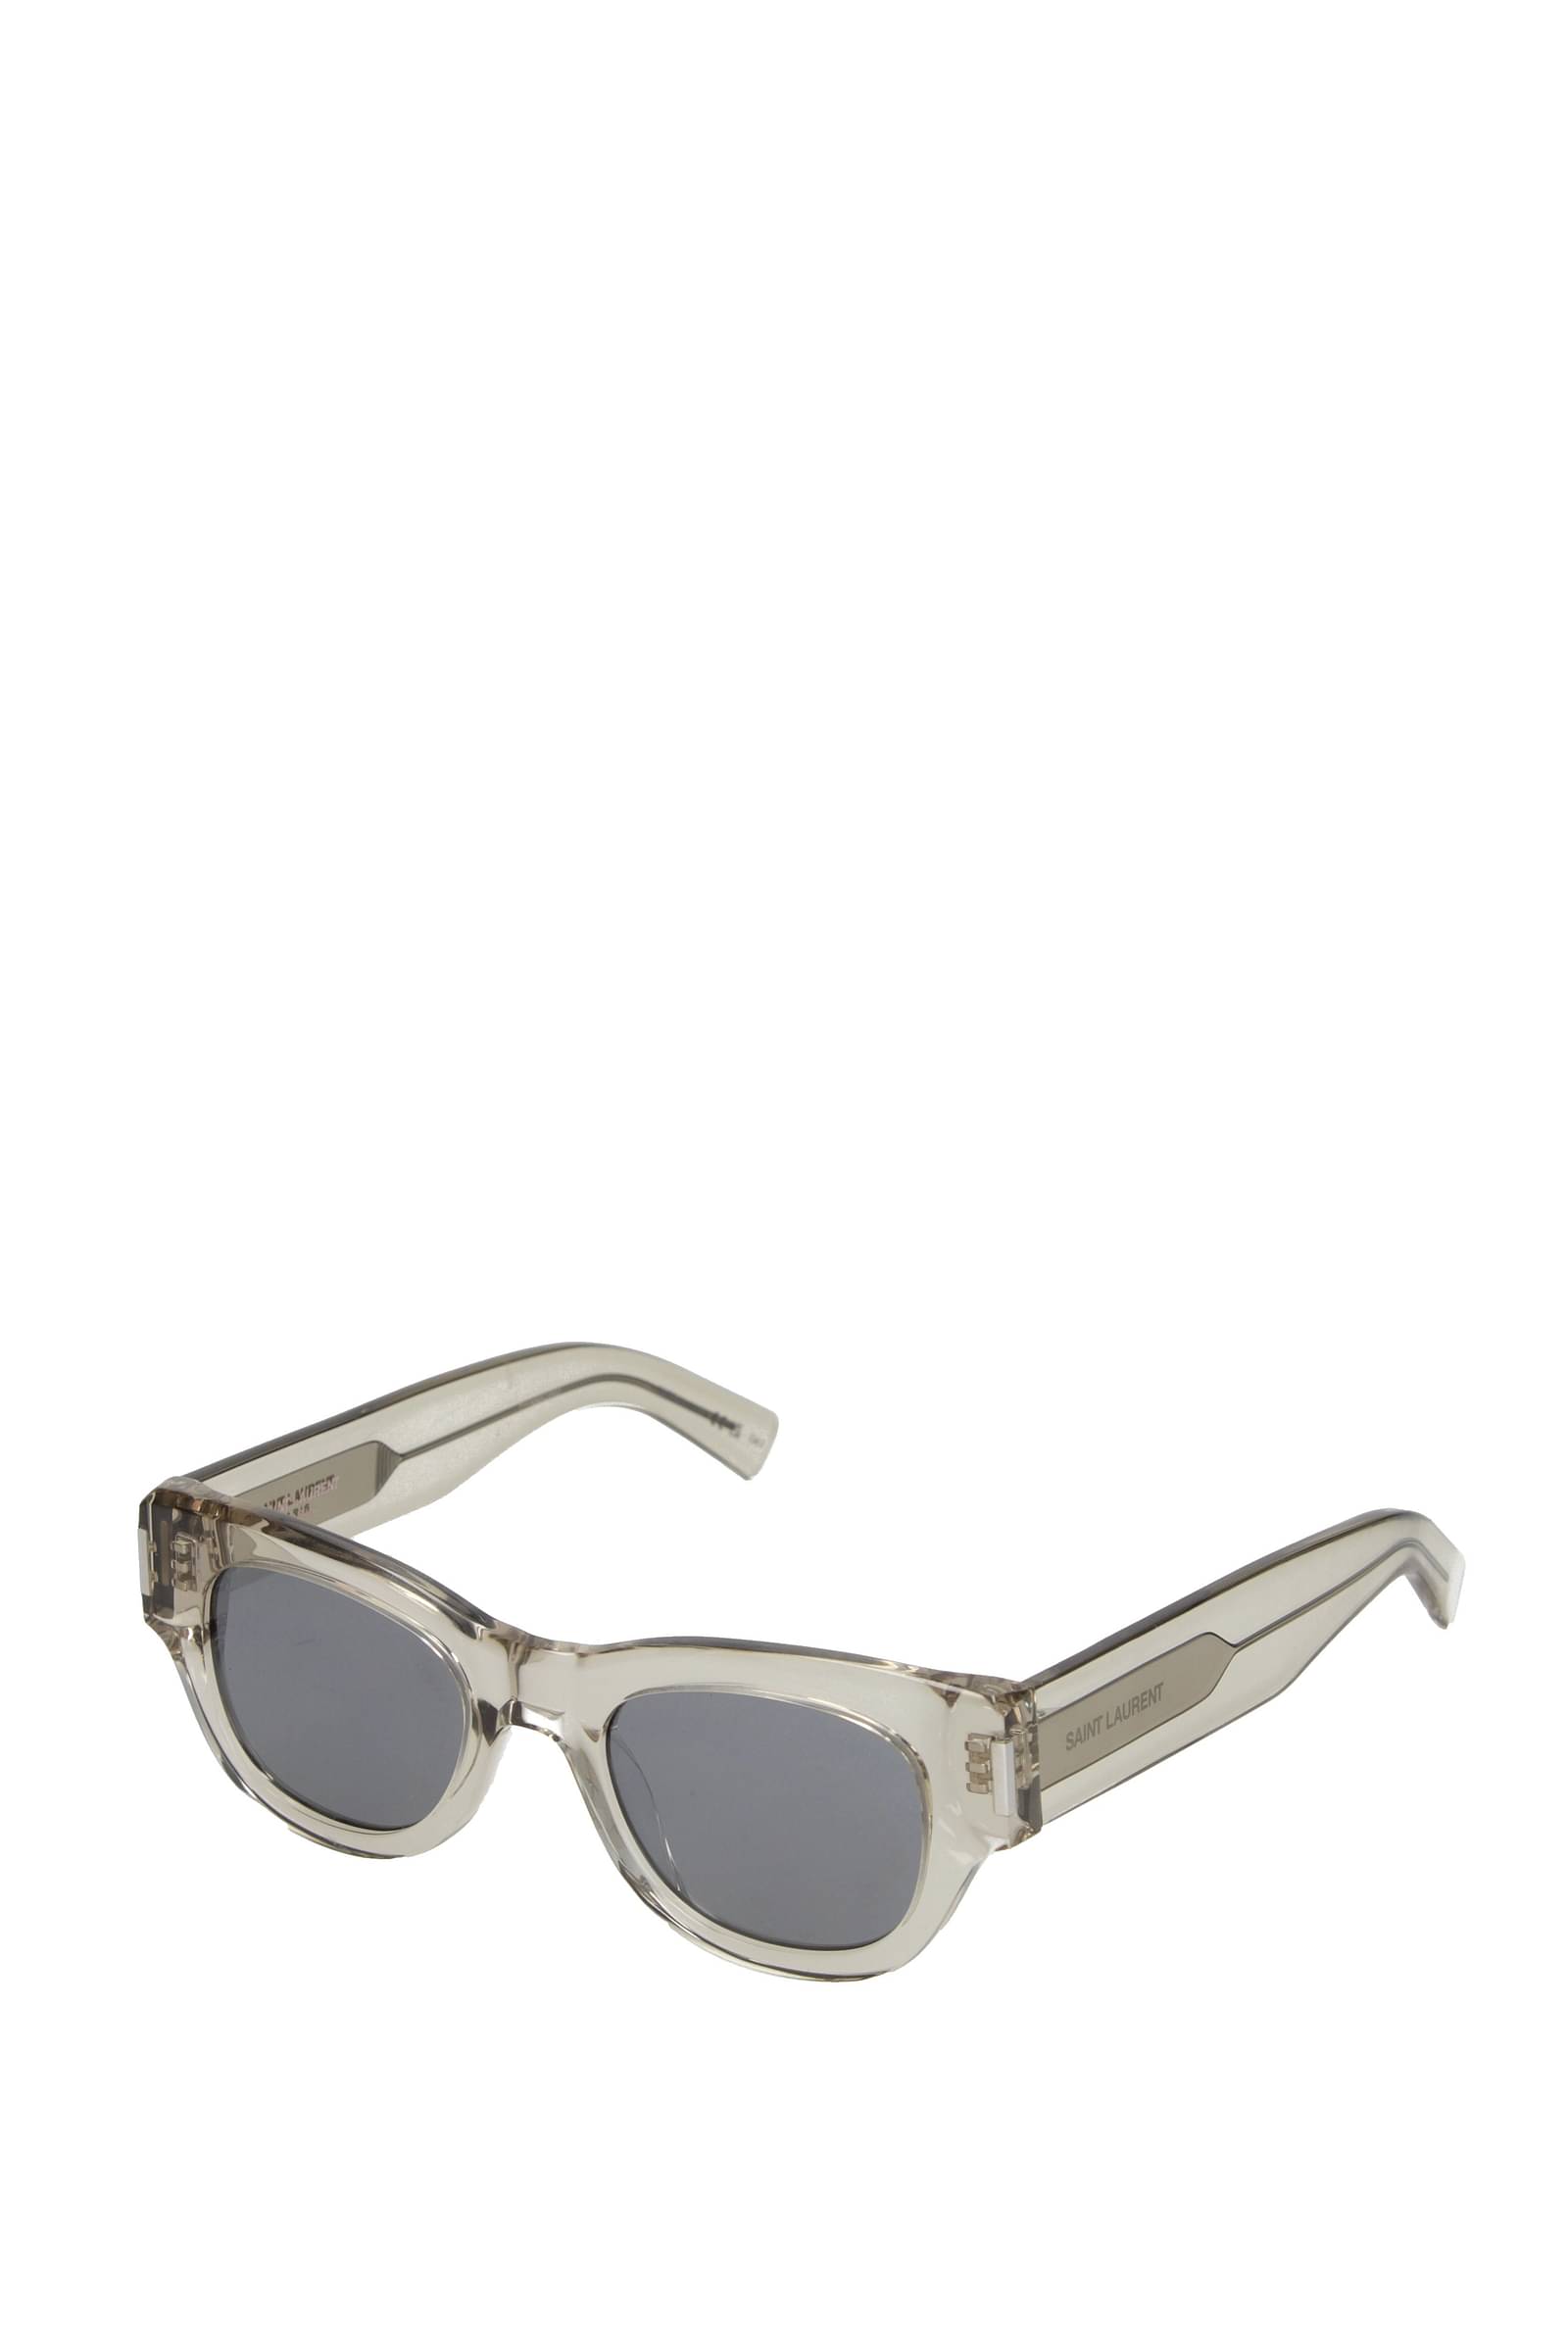 Ani Rose Champagne Cat Eye Sunglasses | Round sunglasses, Sunglasses women  designer, Sunglasses rose